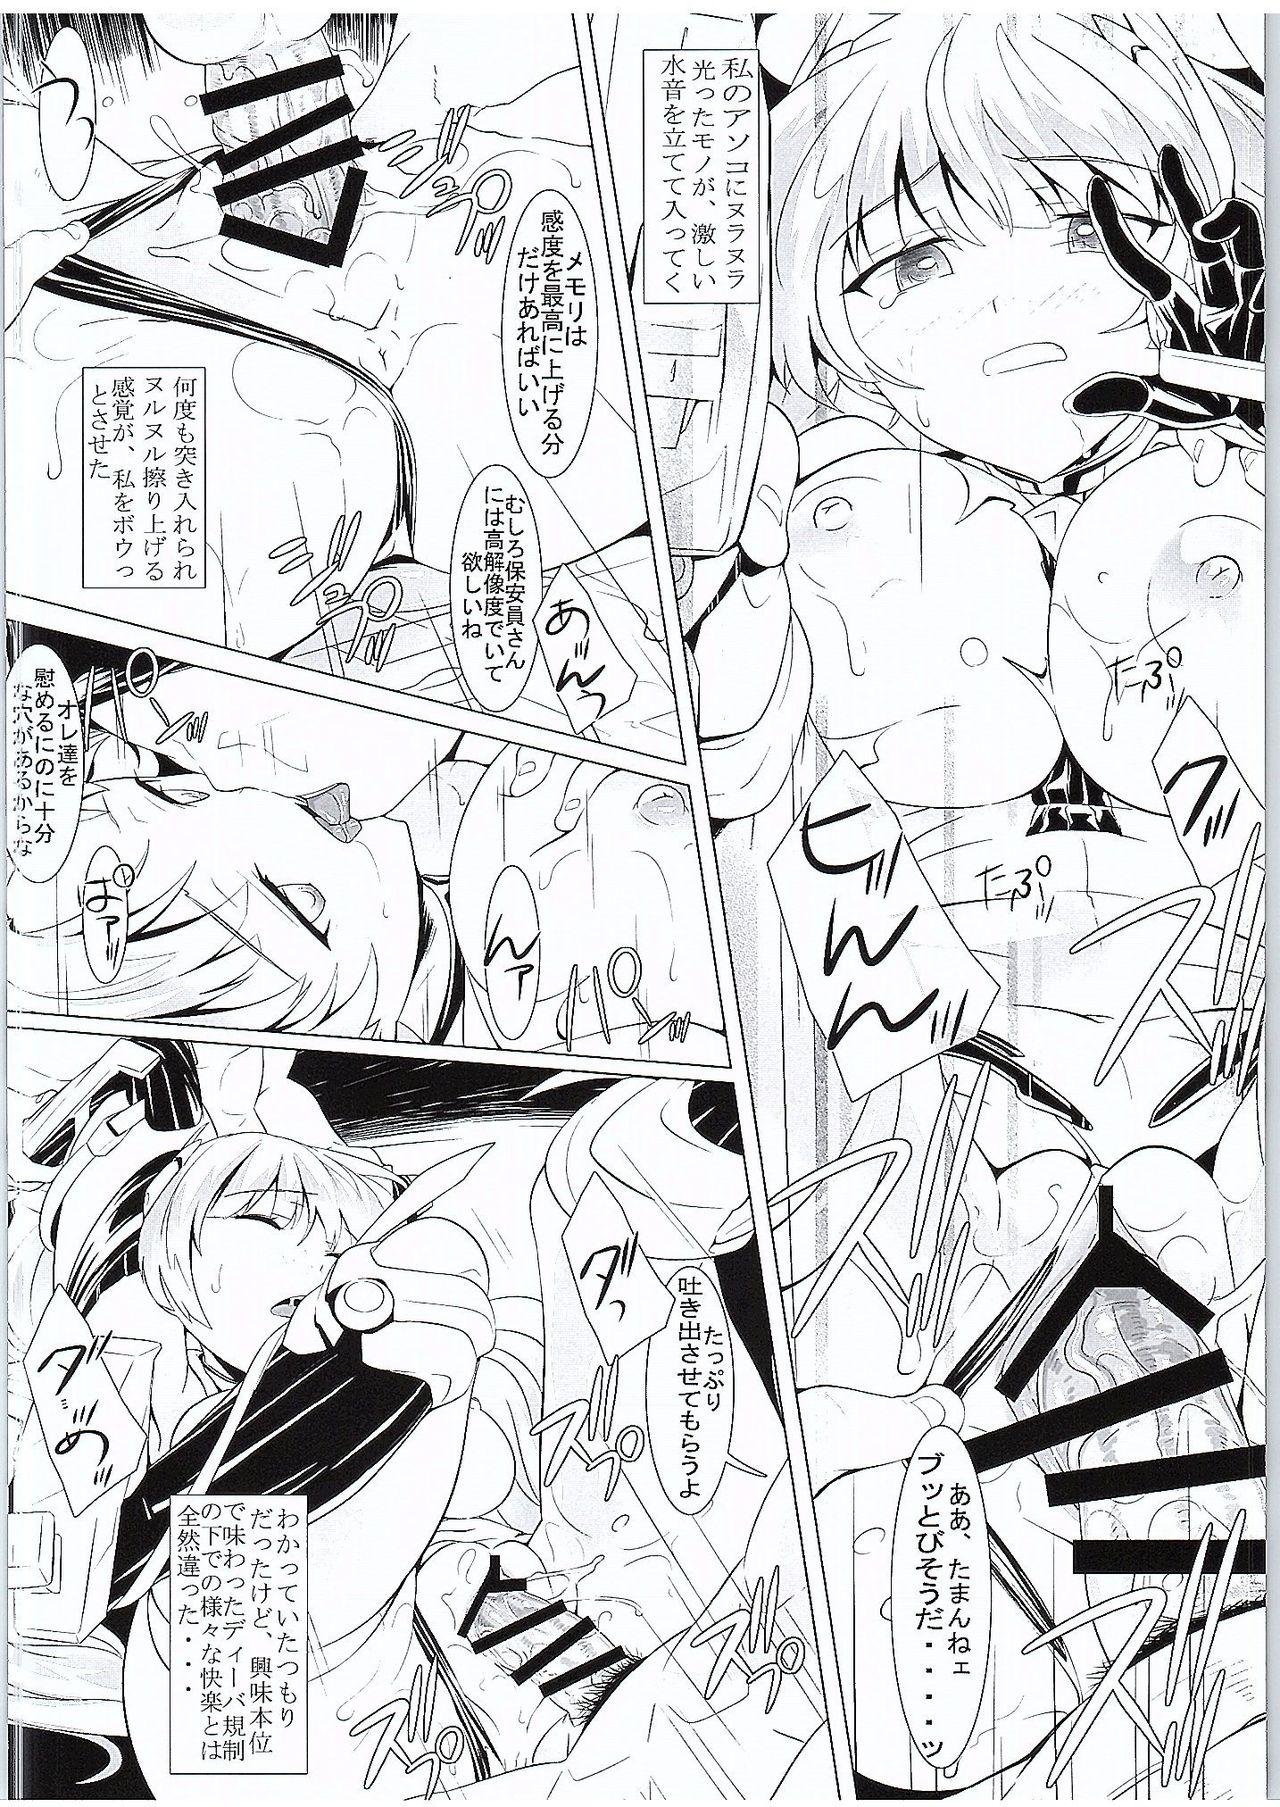 4some Eikyuu Kangoku - Expelled from paradise Weird - Page 11